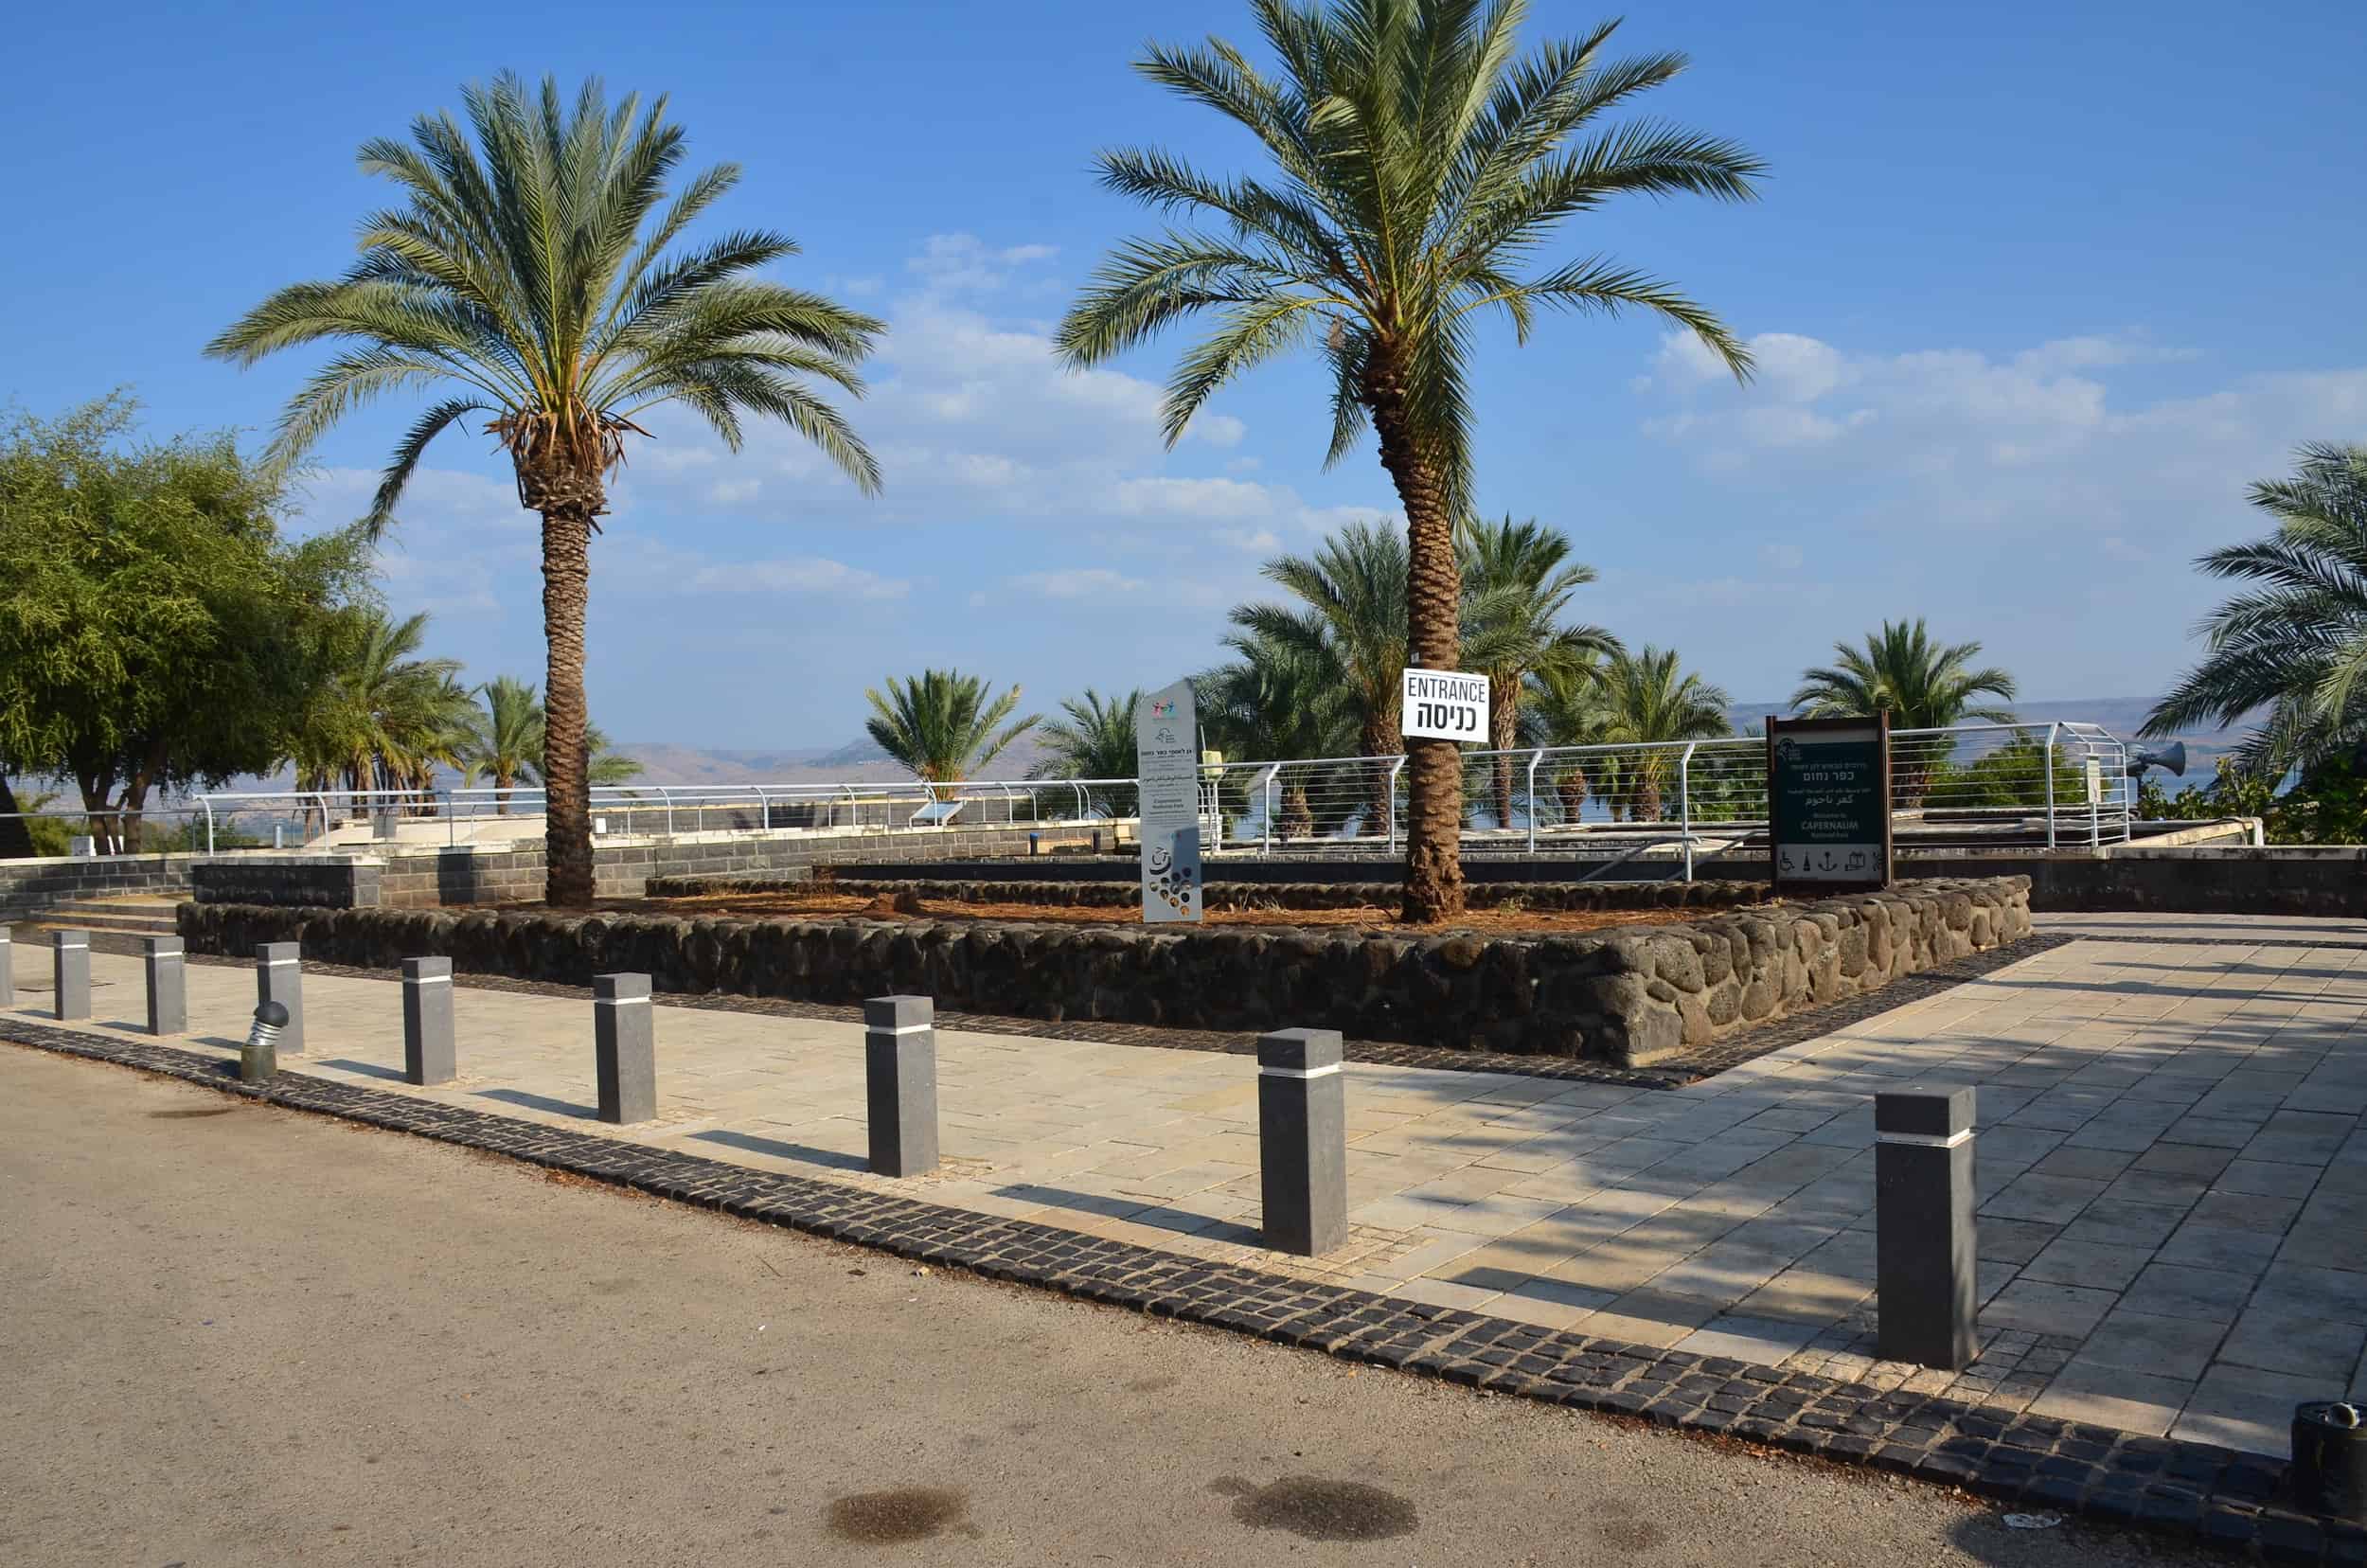 Kfar Nahum National Park in Capernaum, Israel